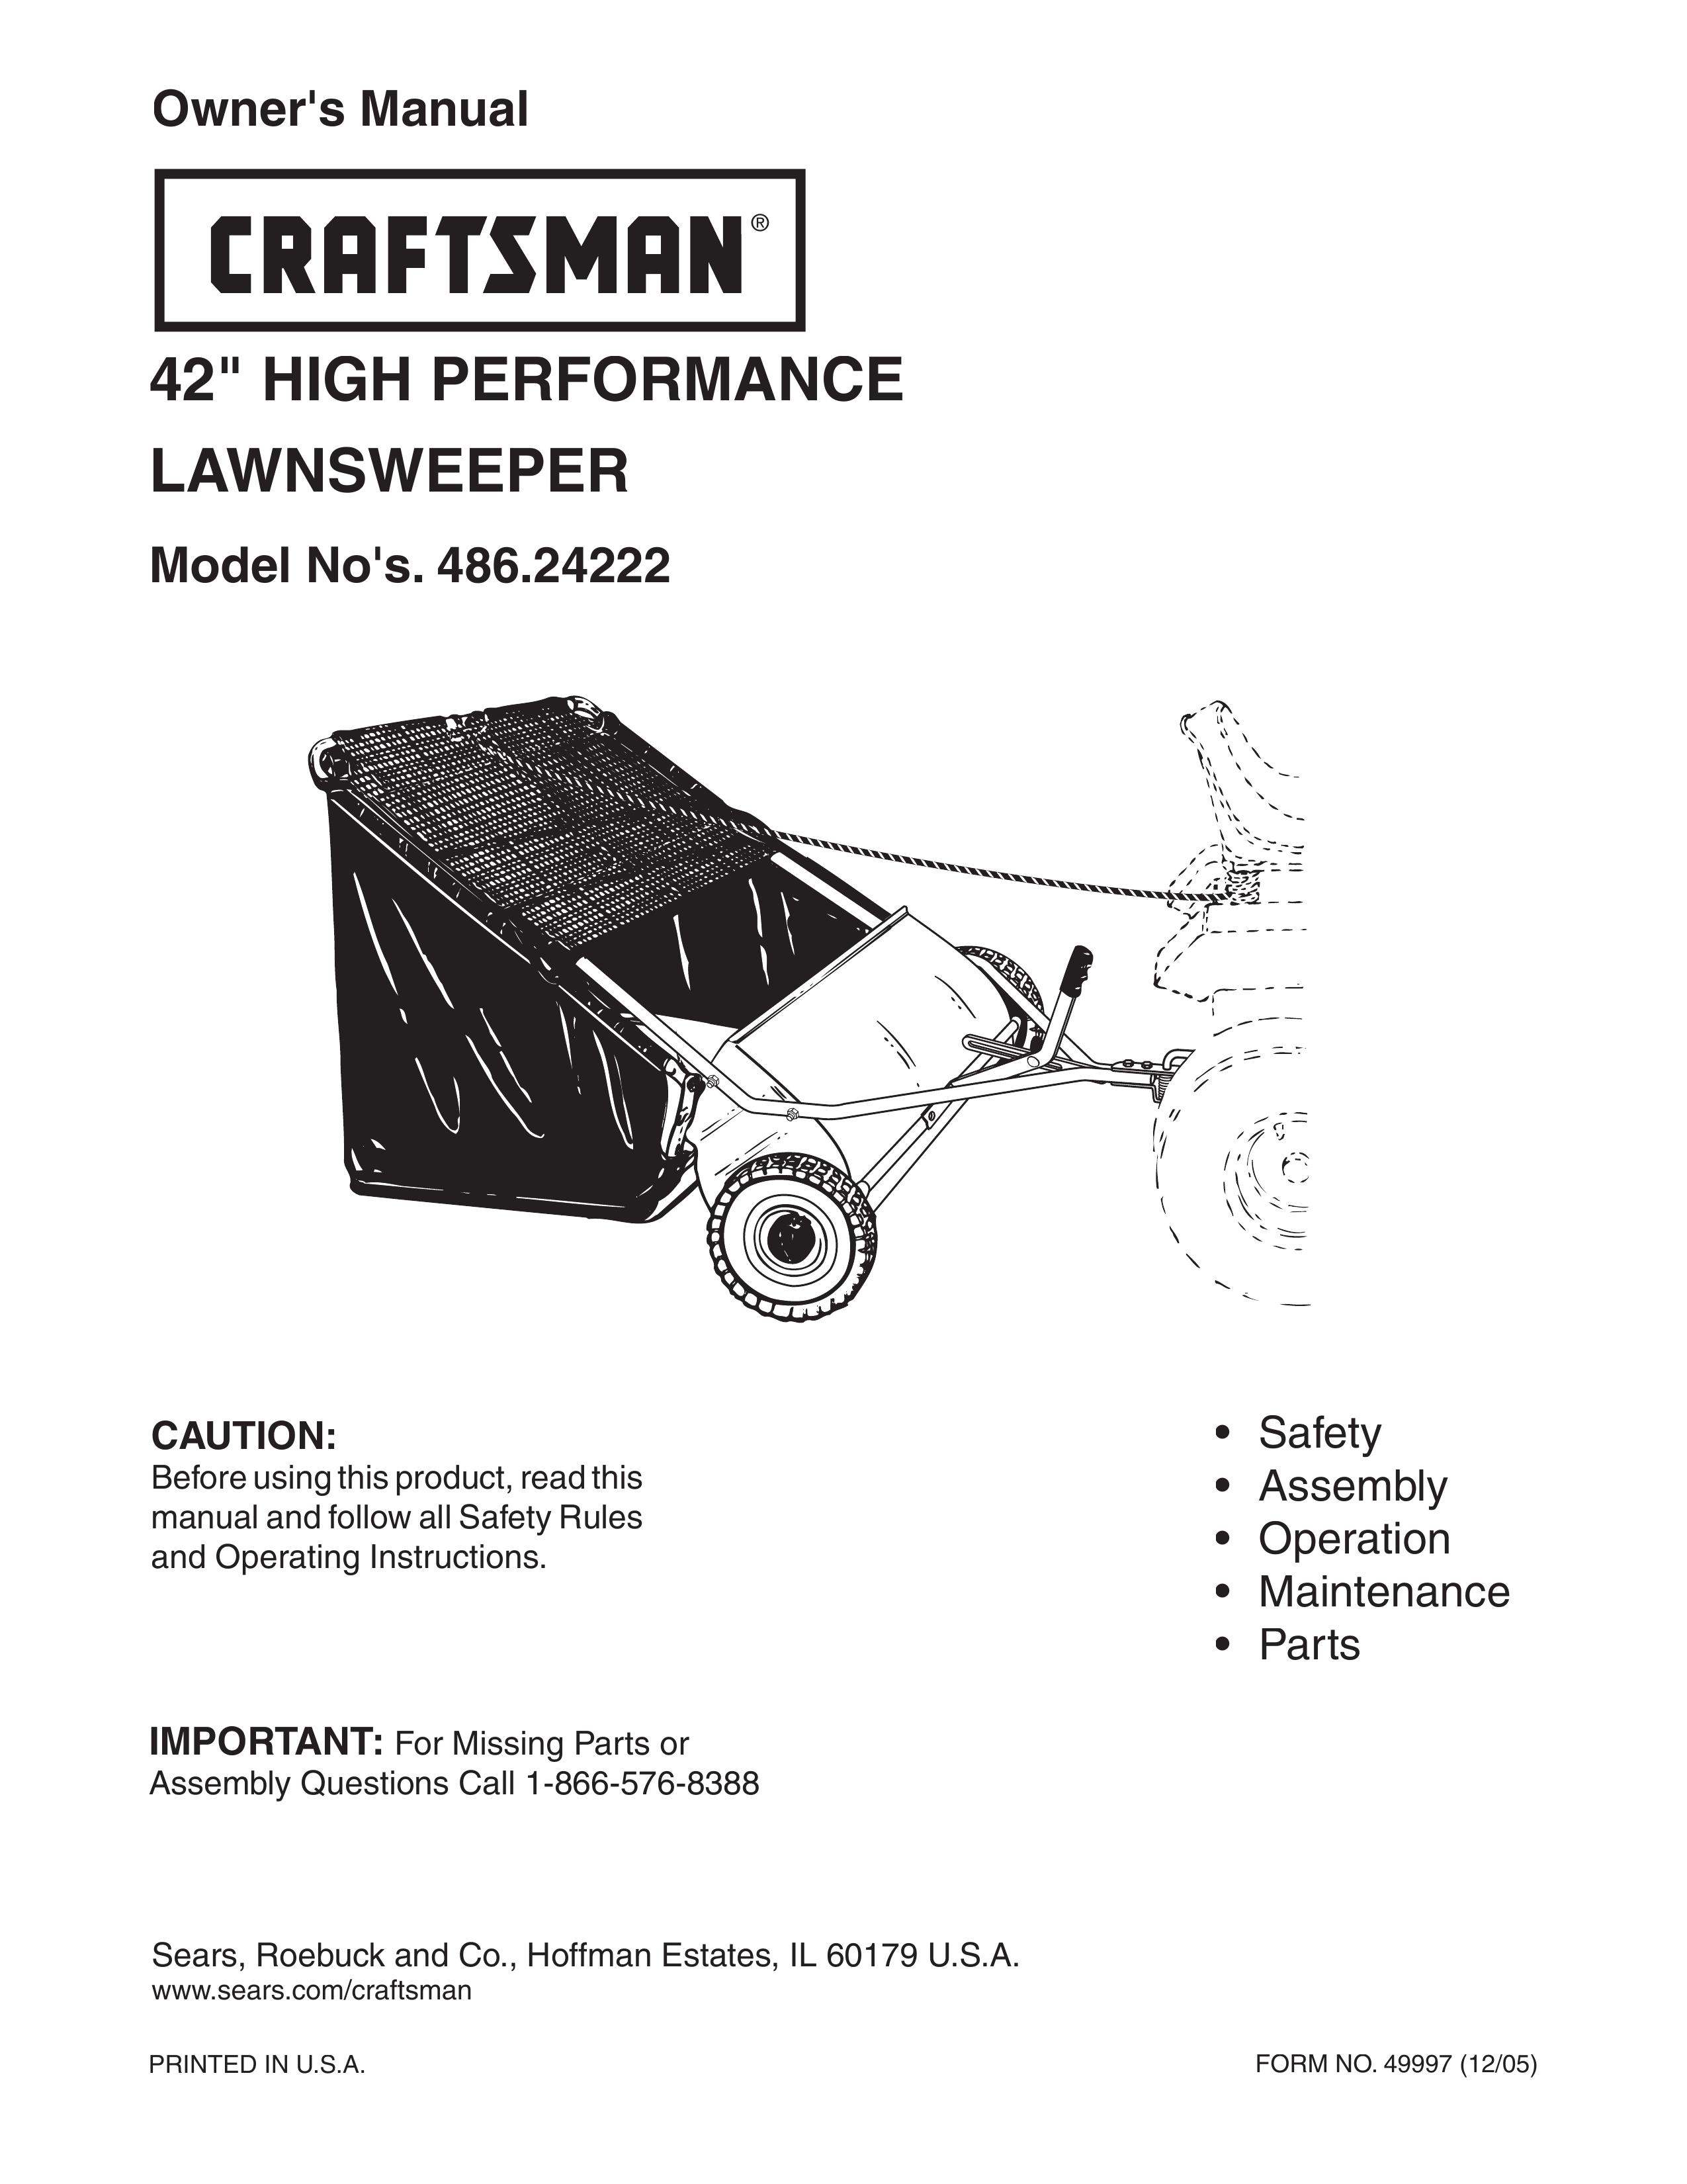 Craftsman 486.24222 Lawn Sweeper User Manual